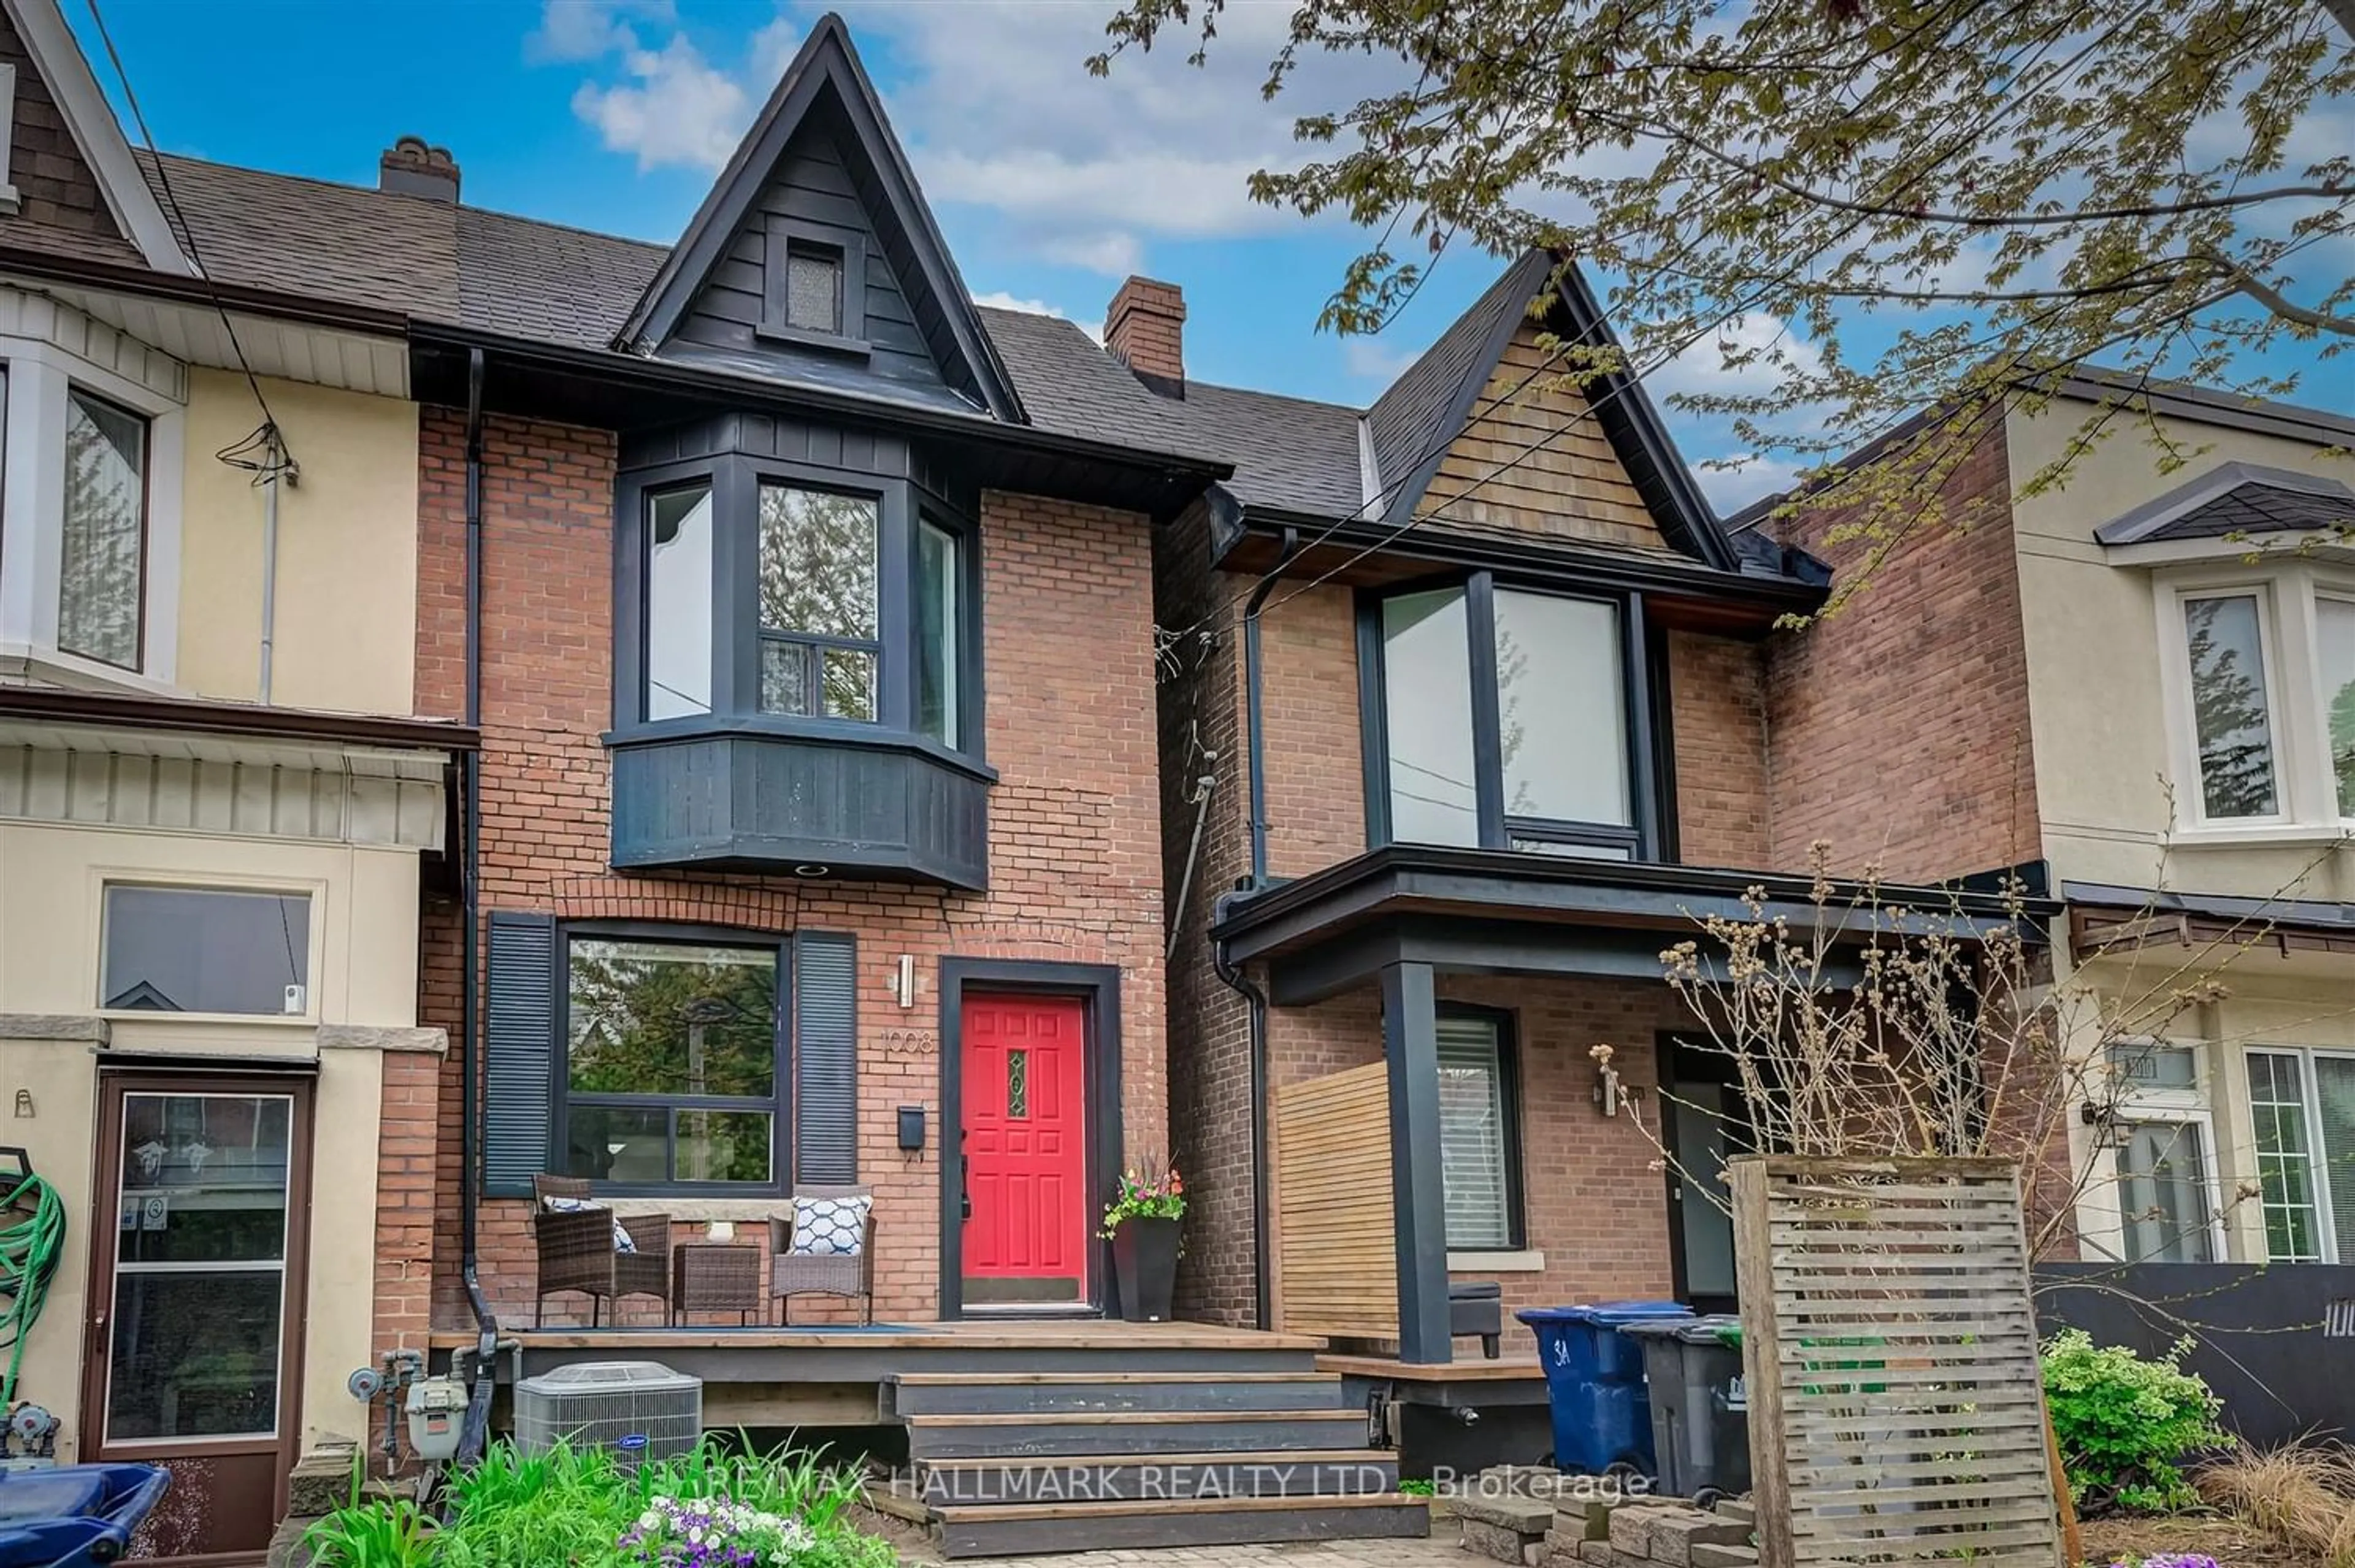 Home with brick exterior material for 1008 Logan Ave, Toronto Ontario M4K 3E5